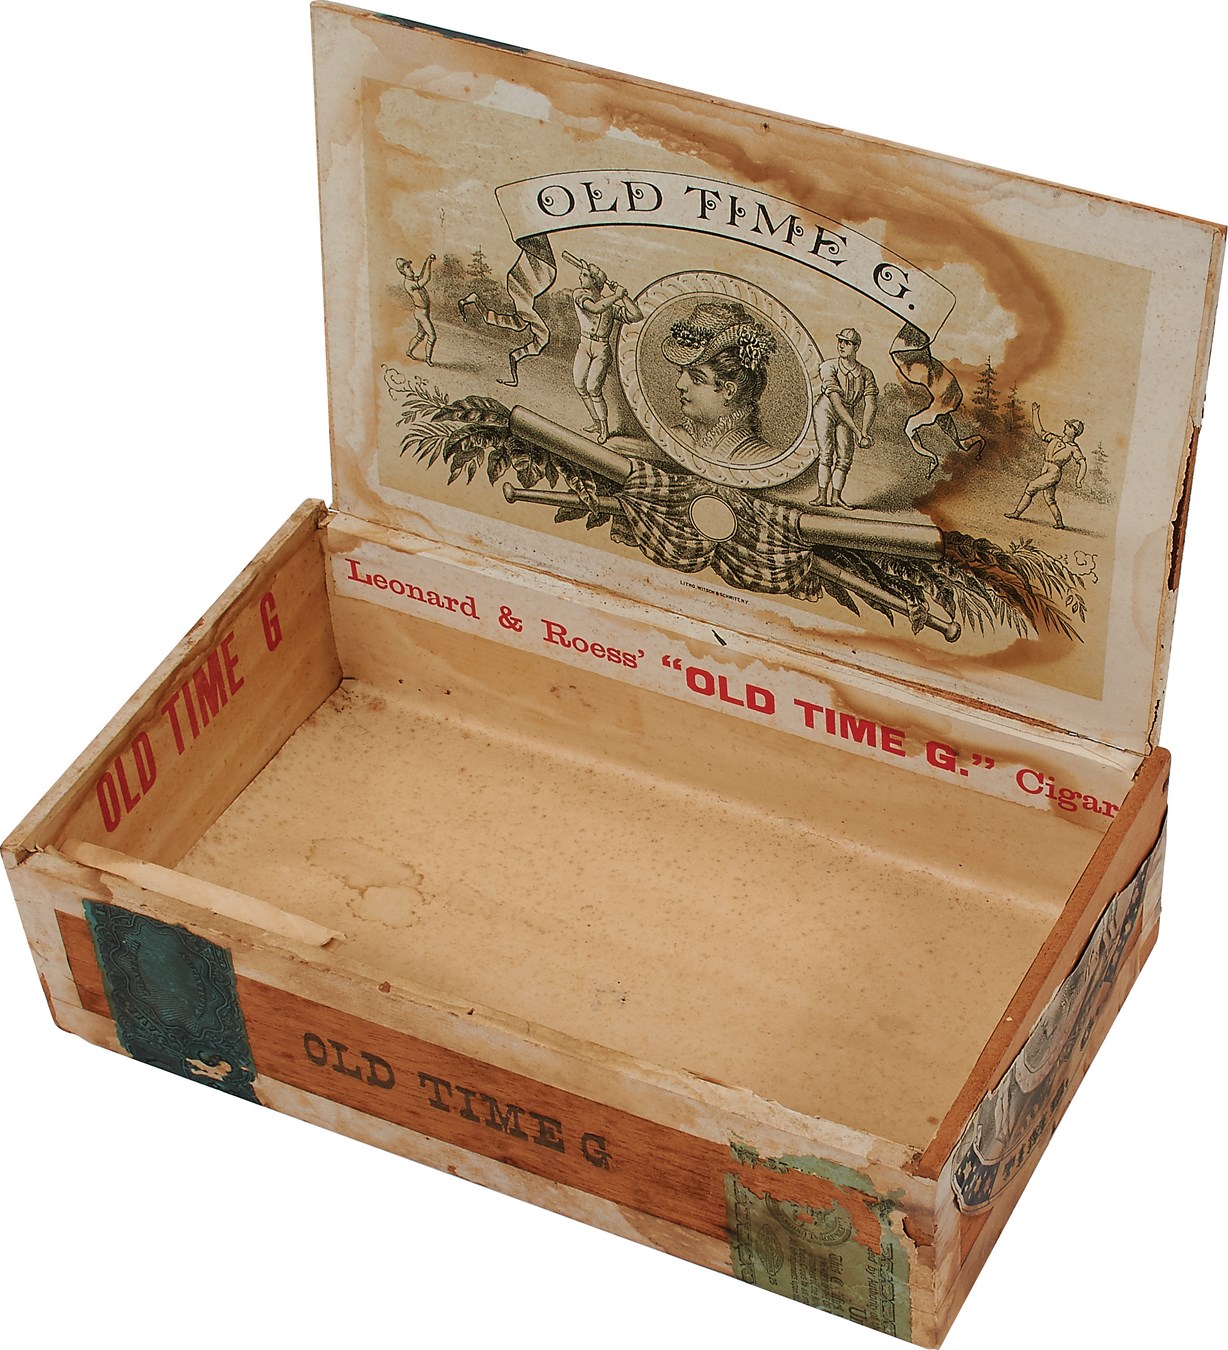 - 1880 "Old Time G" Baseball Cigar Box